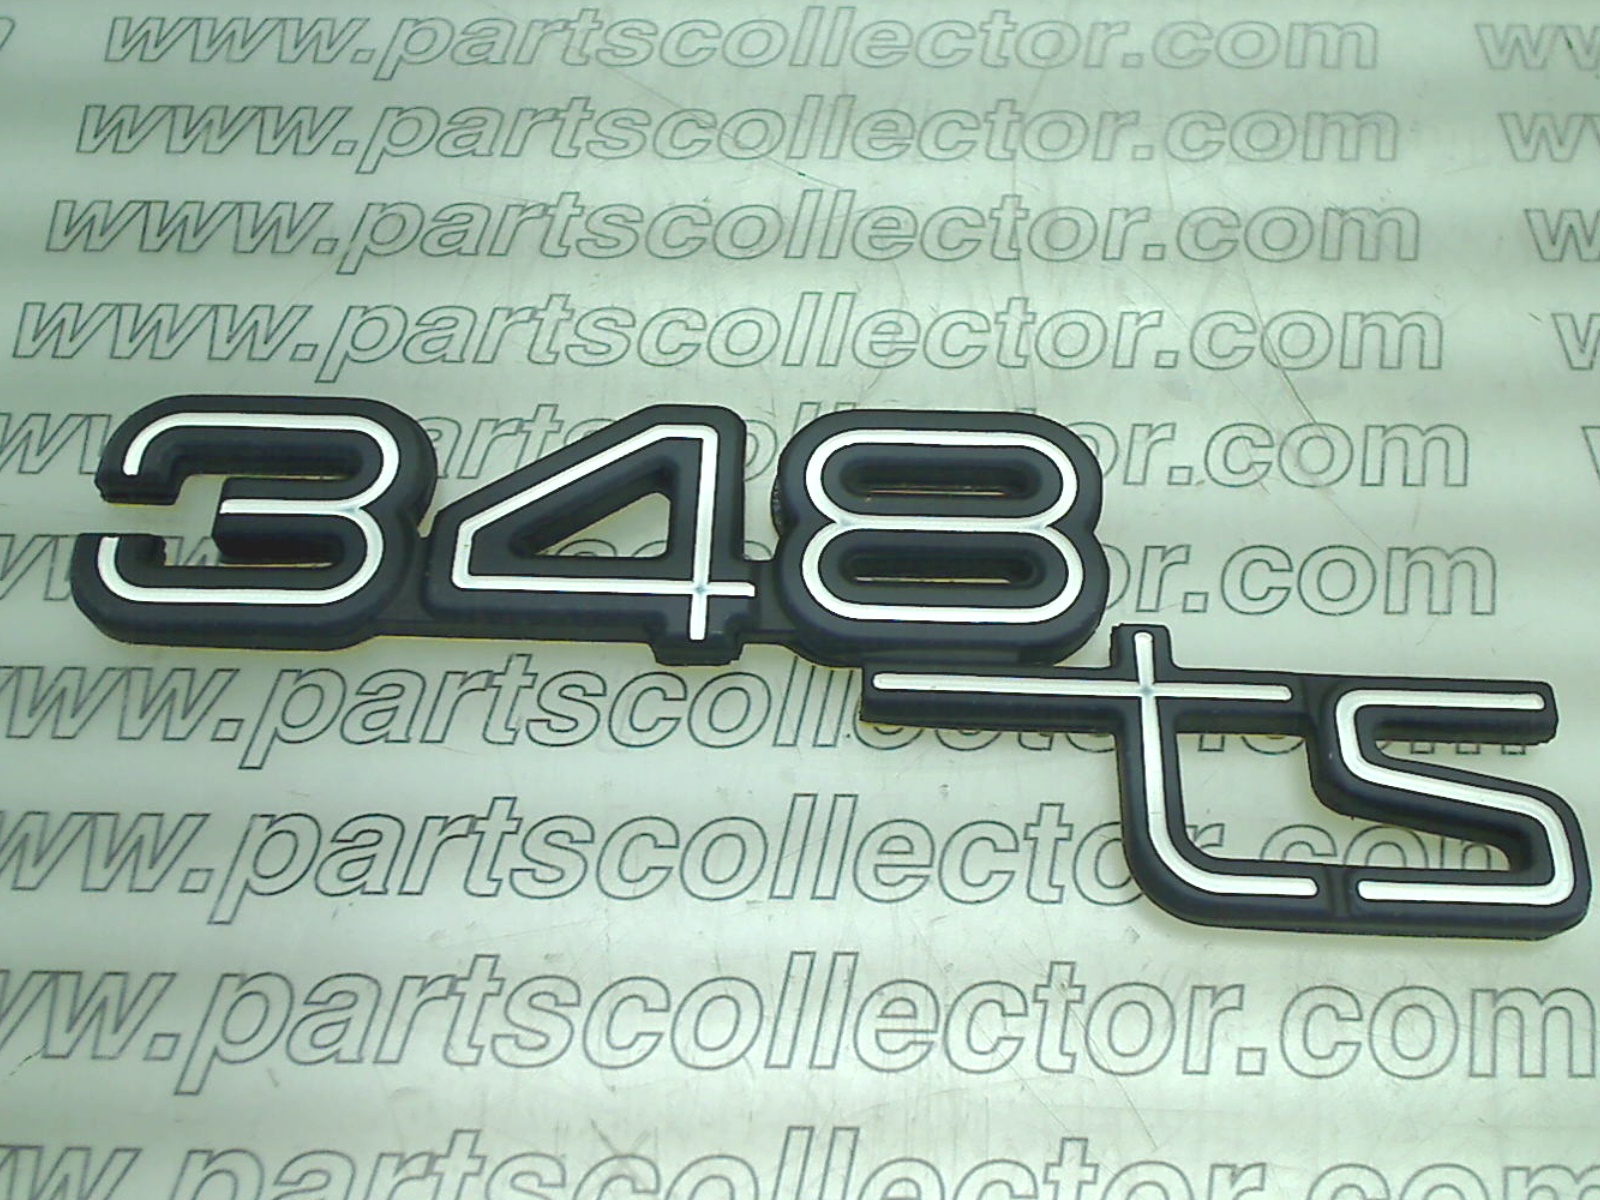 348 TS BADGE